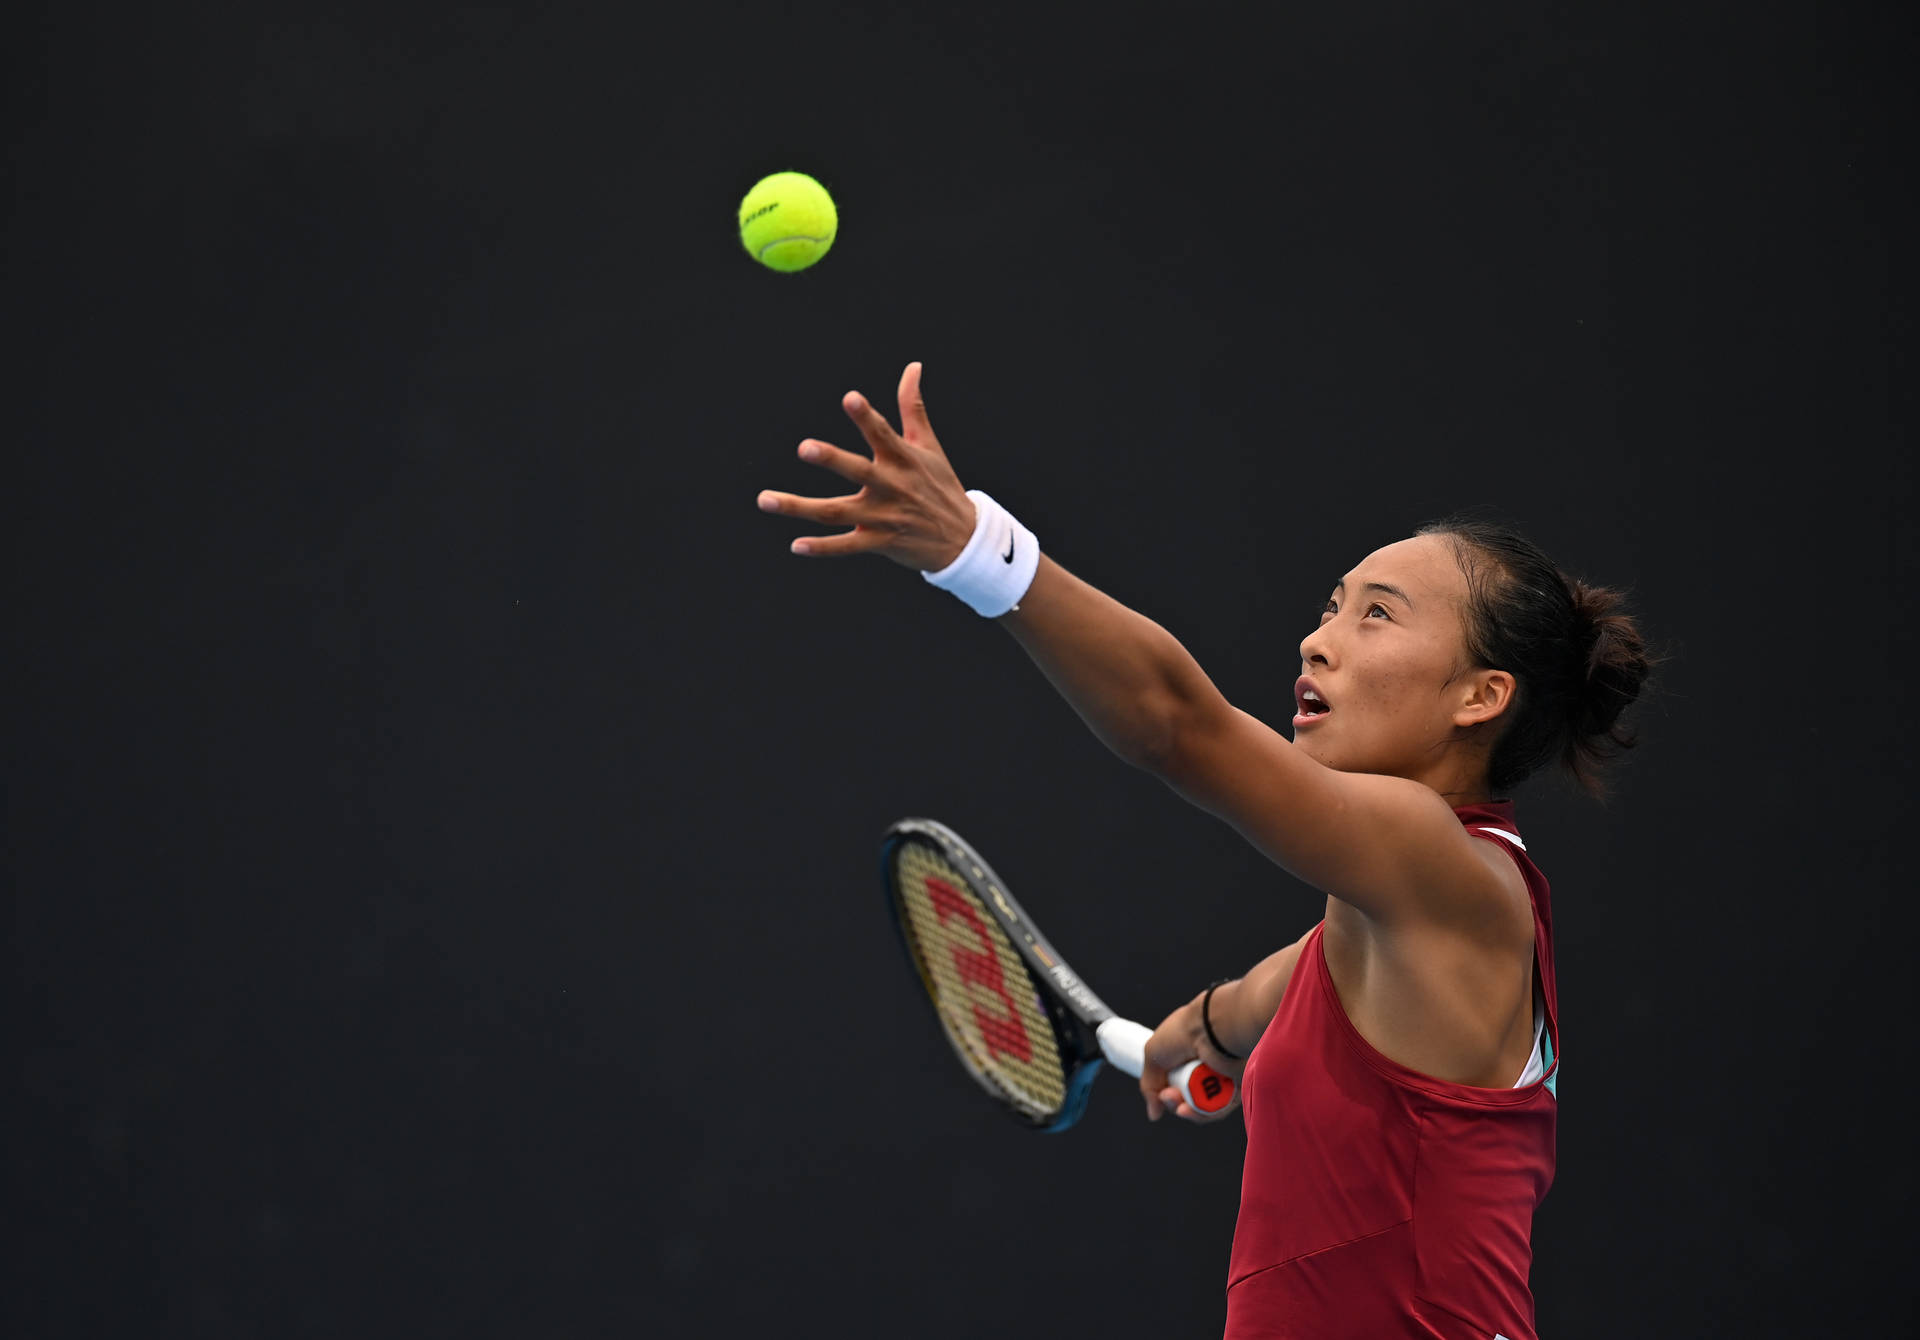 Chip stimulere af Zheng Qinwen reaches Top 100 after long haul to win W60 Orlando | ITF